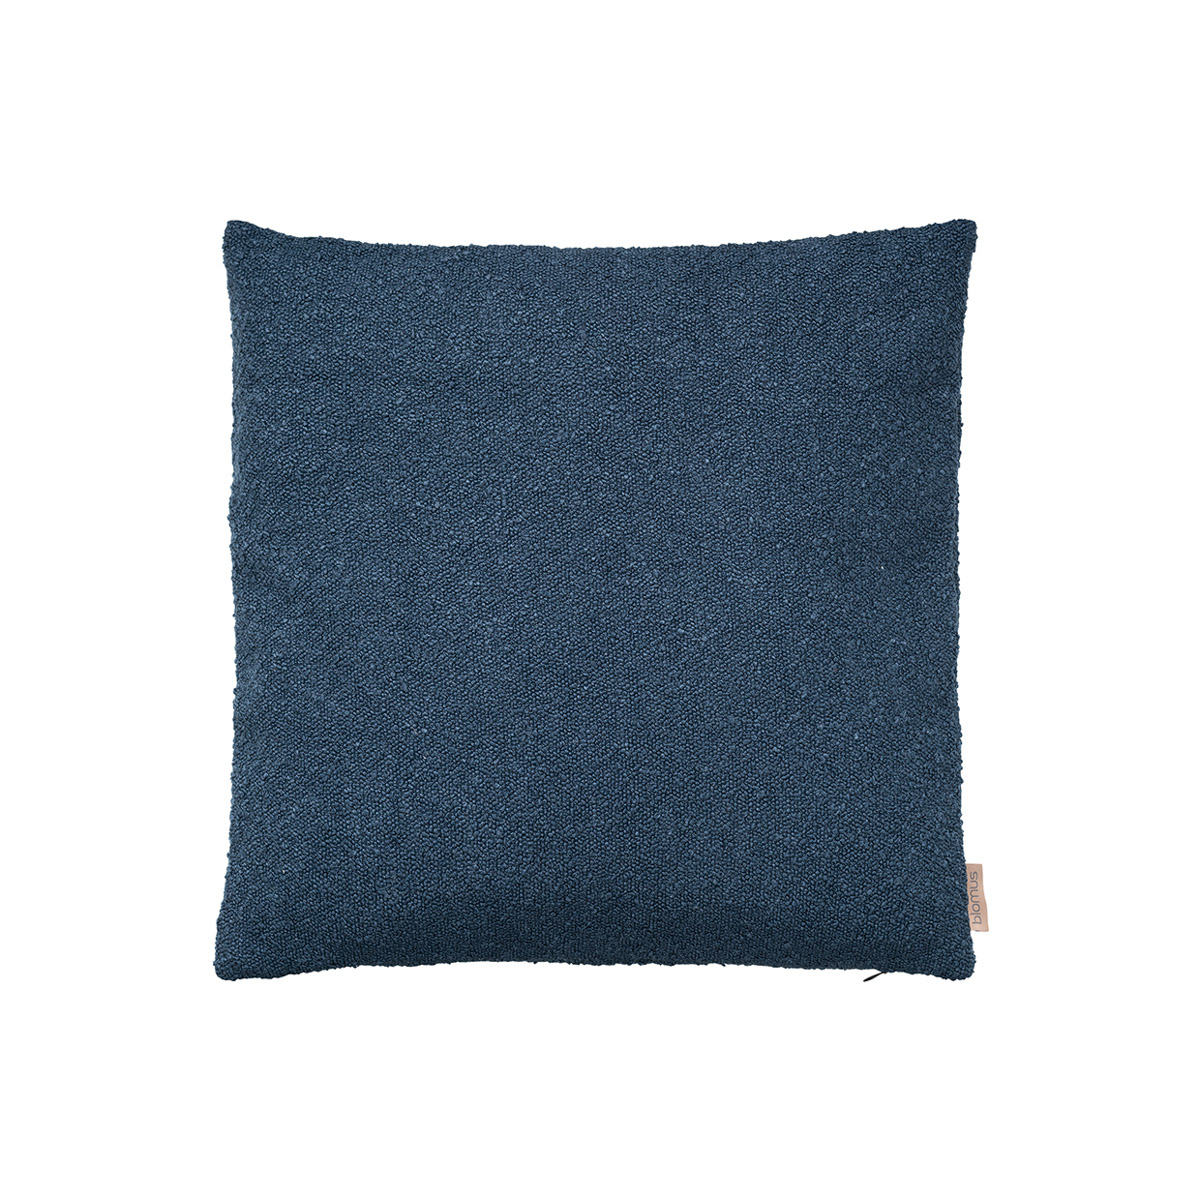 Kissenbezug -BOUCLE- Midnight Blue 50 x 50 cm. Material: 90% Polyester, 10% Acryl. Von Blomus.